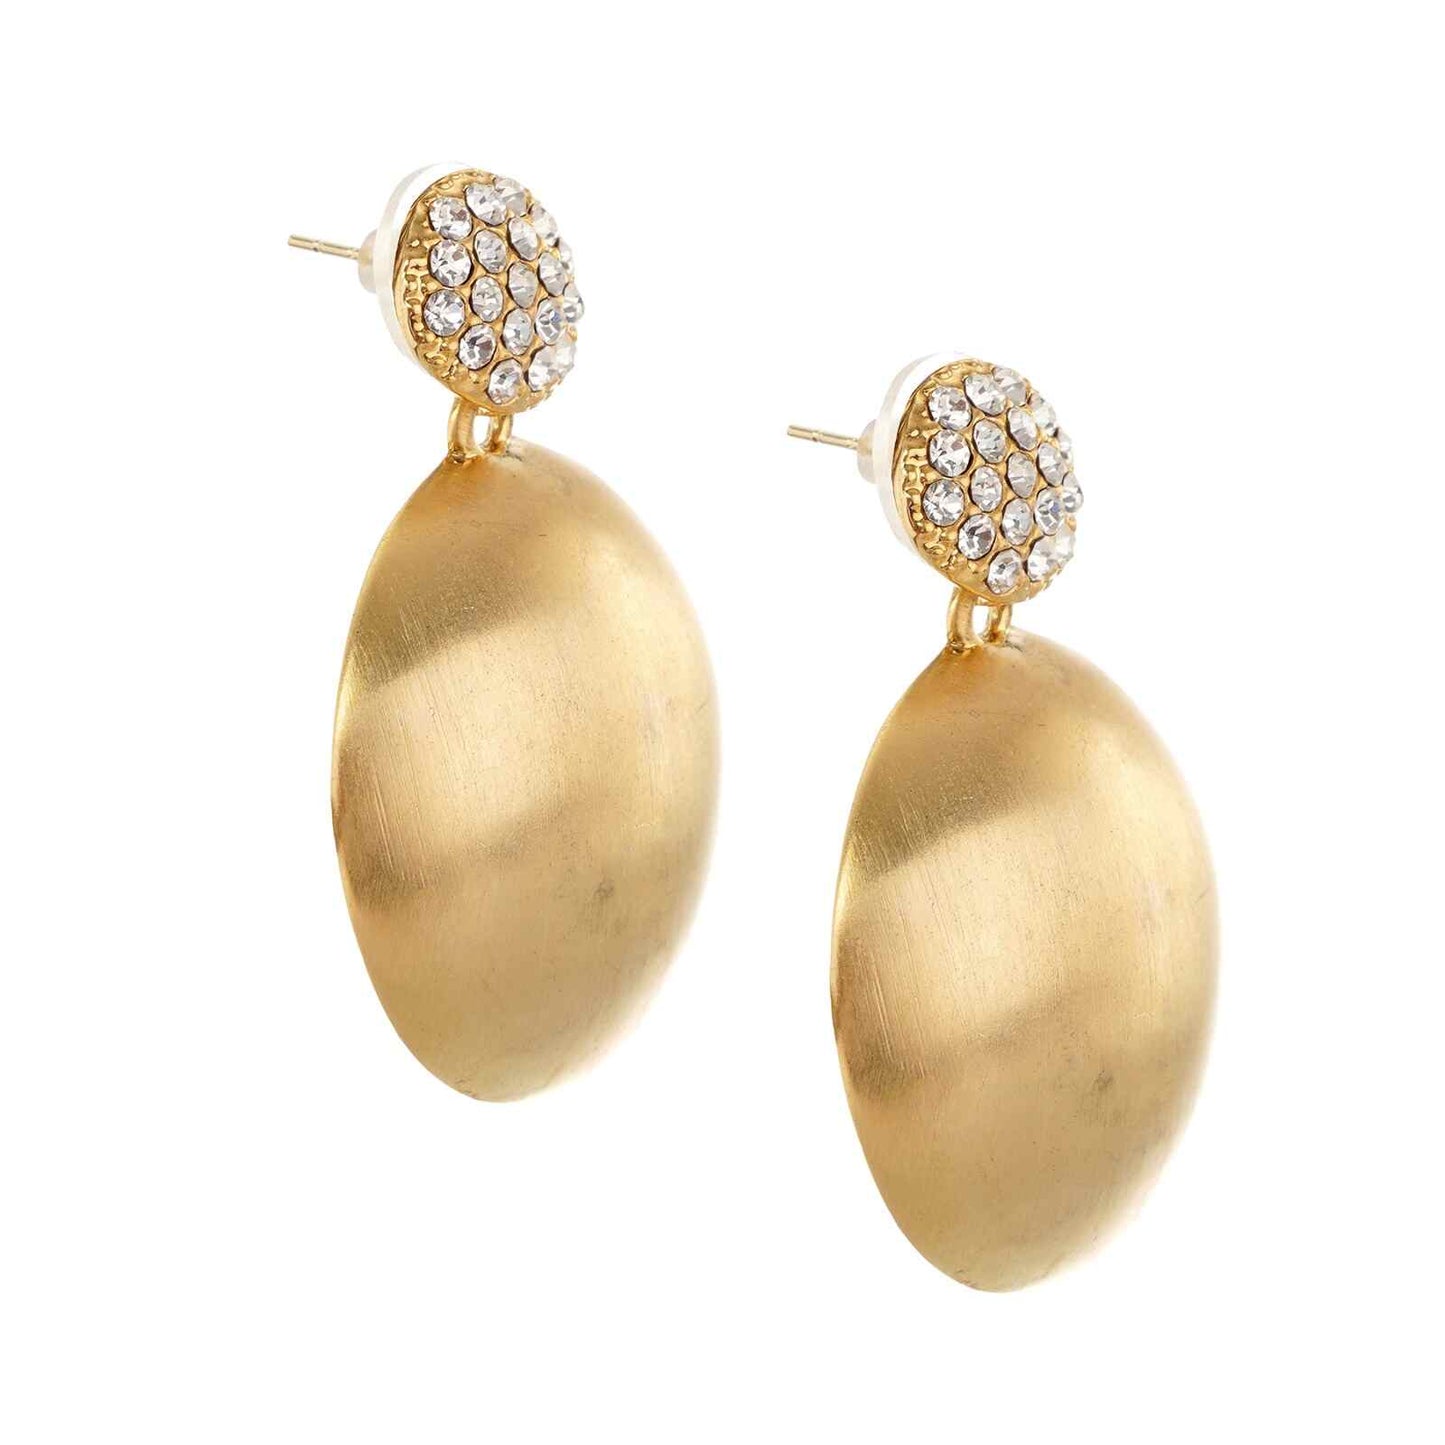 Gold Stud Earrings | Costume Jewellery | Waterproof Jewellery | Premium Earrings